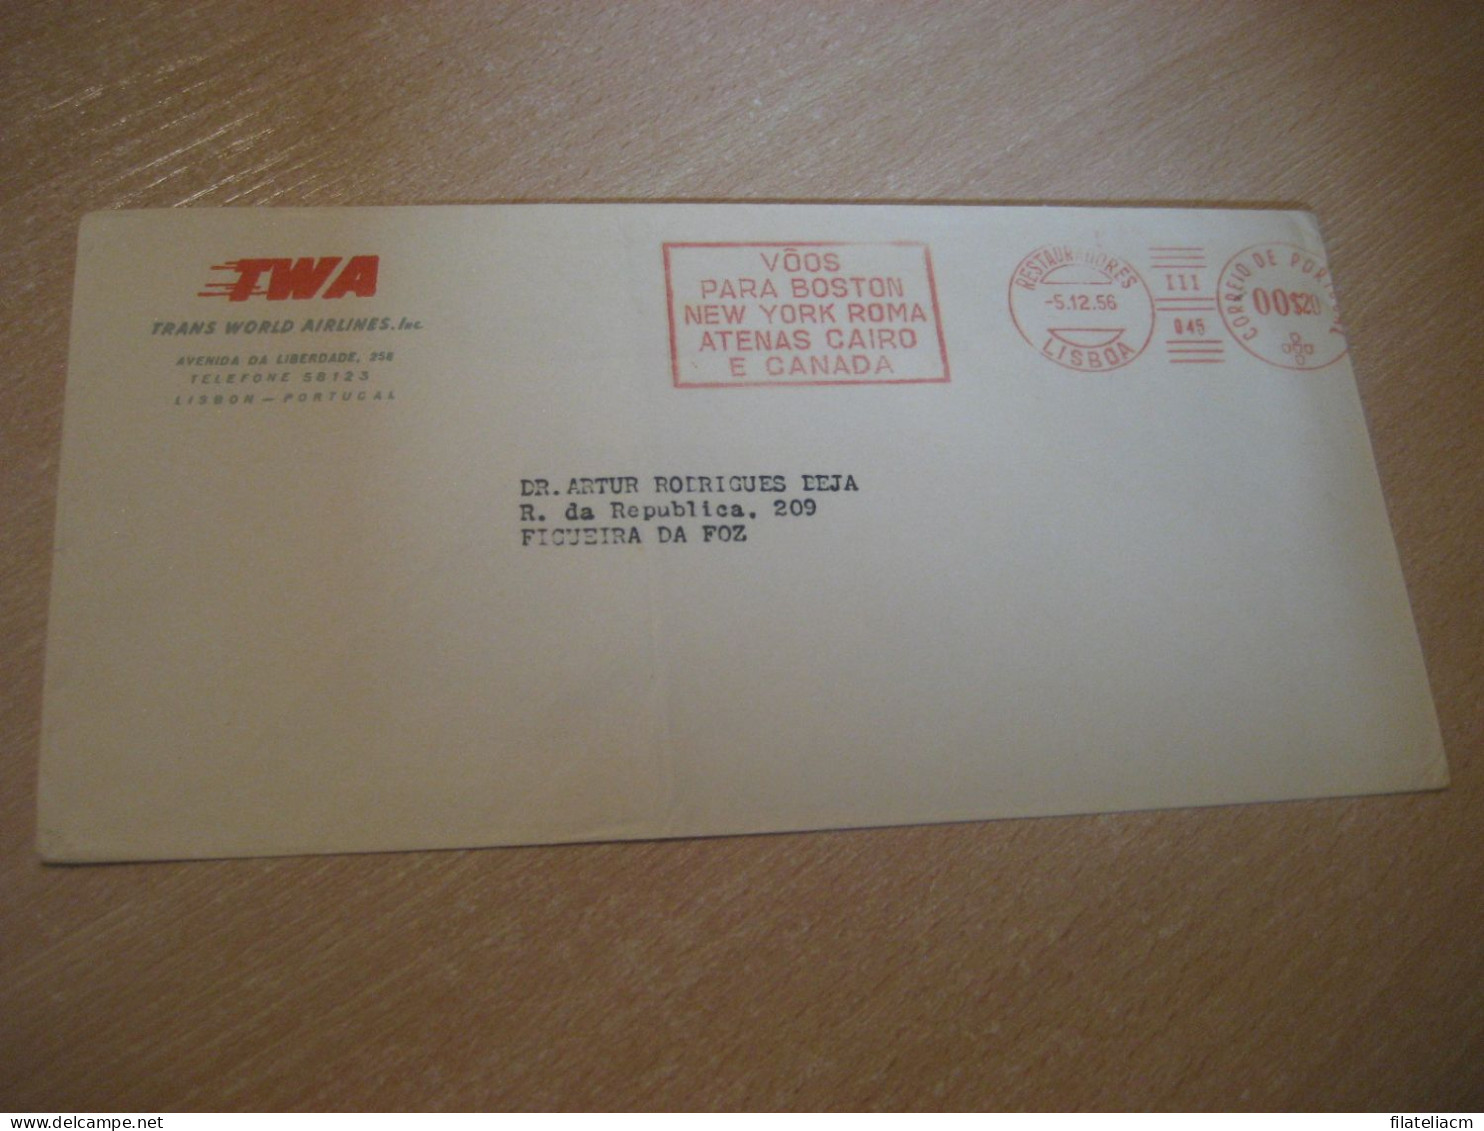 LISBOA 1956 To Figueira Da Foz TWA Airline Trans World Airlines Voos Flight Meter Mail Cancel Cover PORTUGAL - Cartas & Documentos